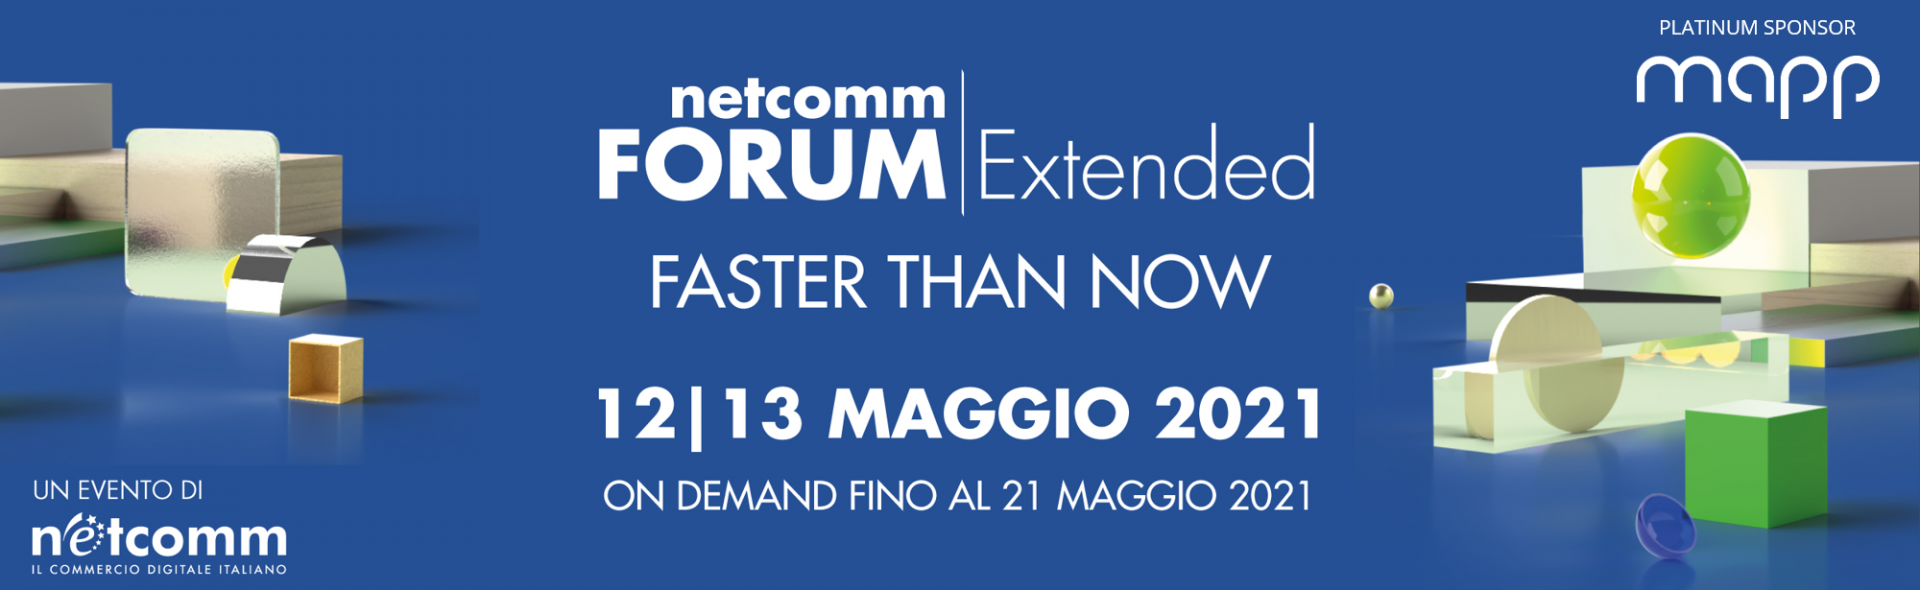 Mapp è Platinum Sponsor di Netcomm Forum:  plenaria con Prénatal e workshop con ePRICE